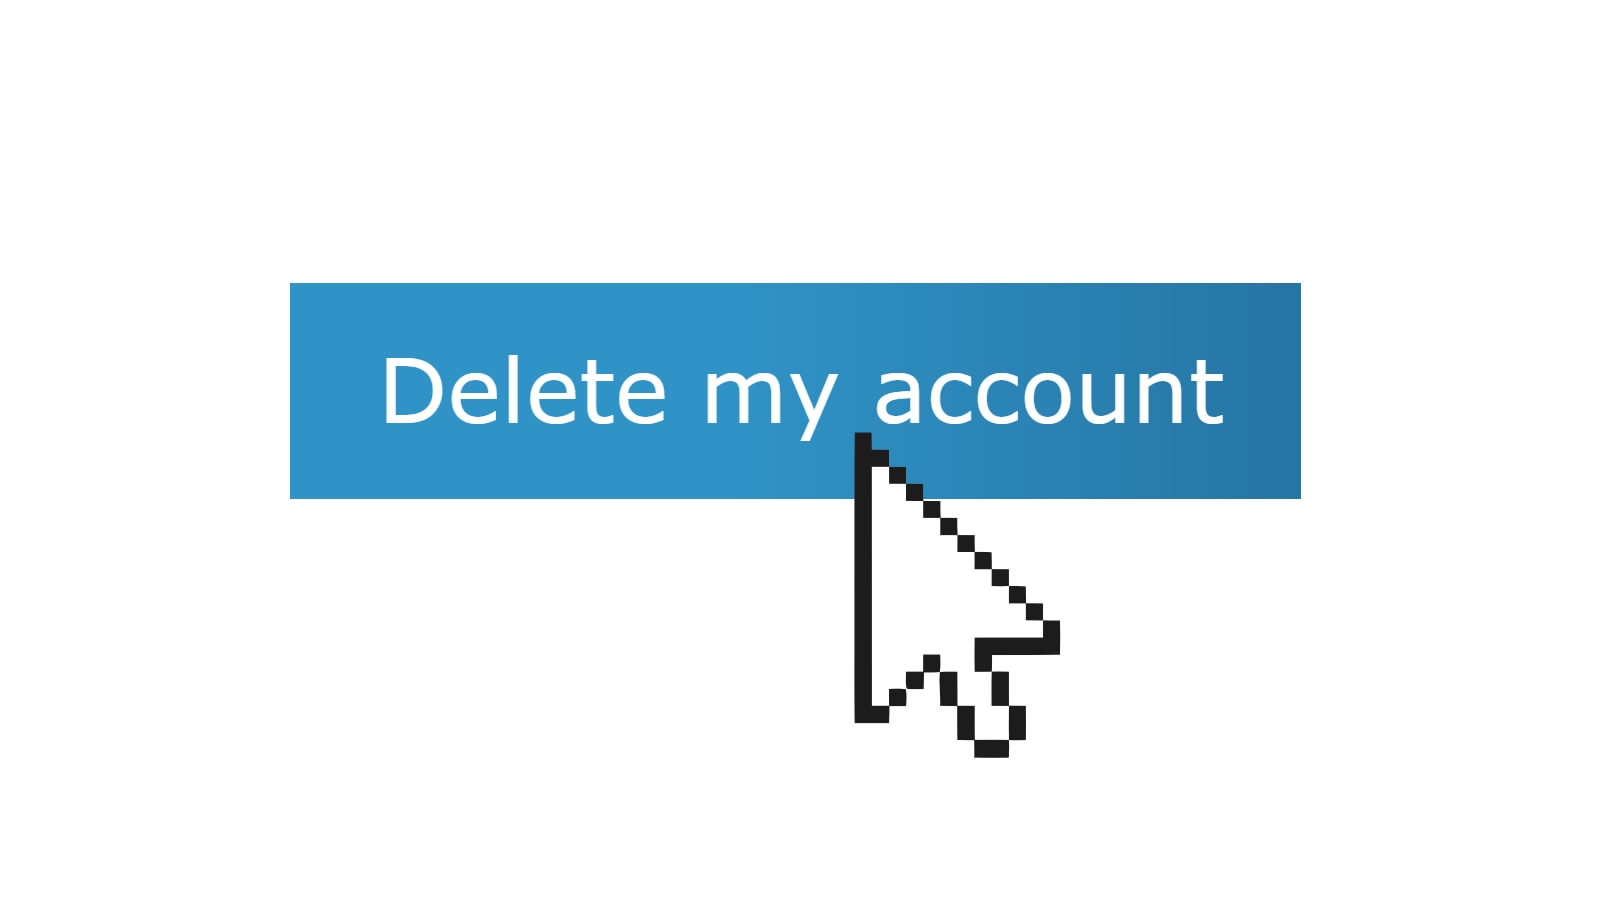 How do i delete my mascot account?